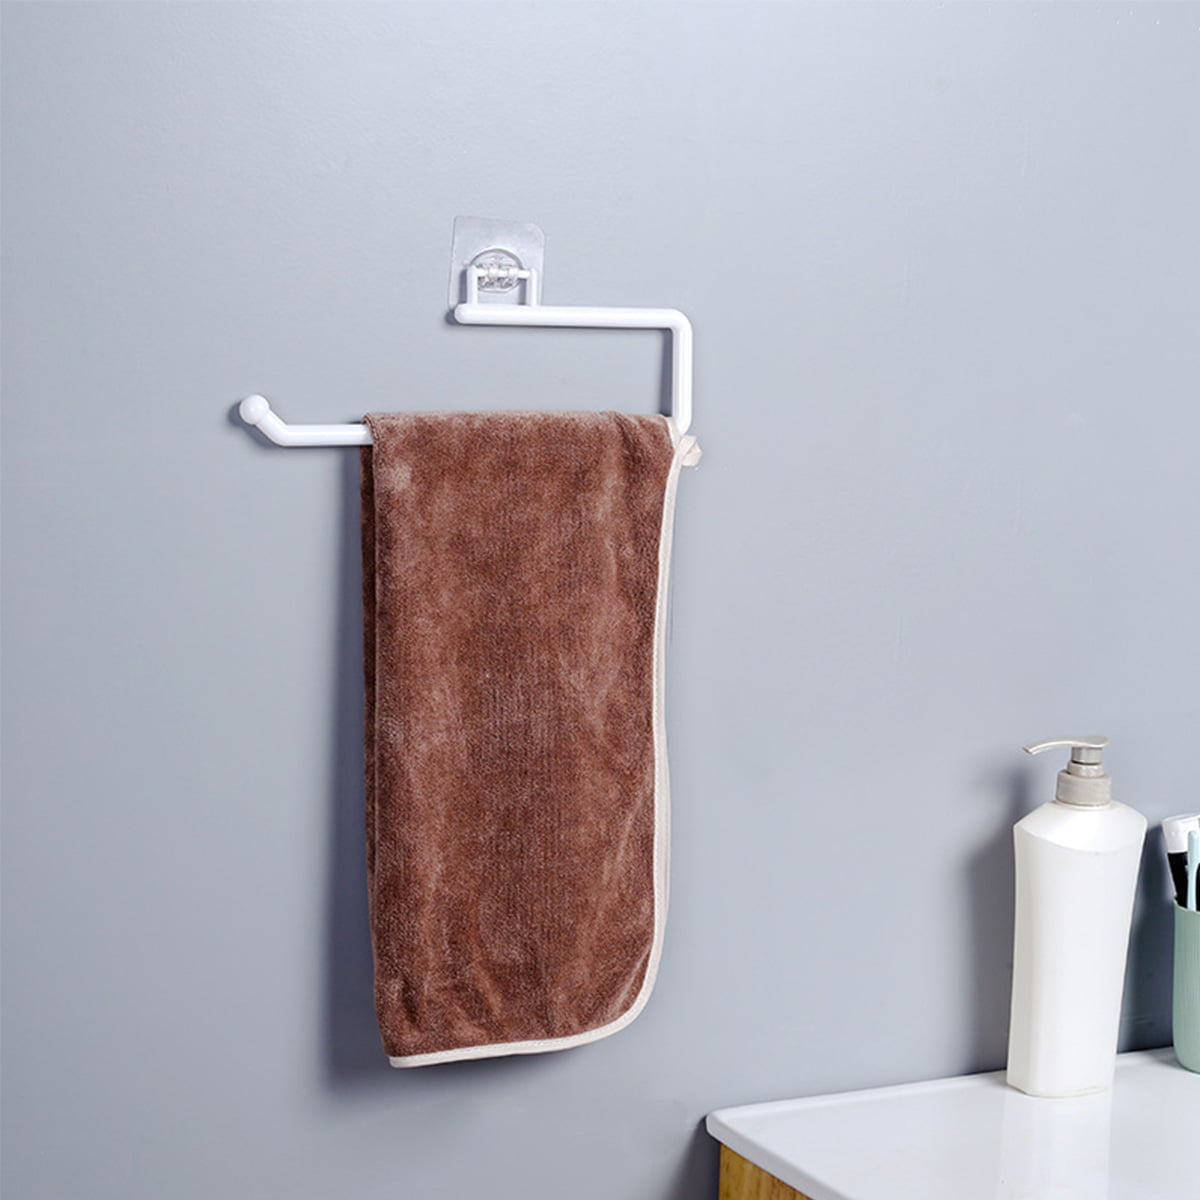 widshovx Paper Towel Holder Wall Mount Paper Towel Rack Self Adhesive Under Cabinet  Paper Towel Holder 11.2 Inch Toilet Paper Holder for Kitchen Bathroom  Cabinets 